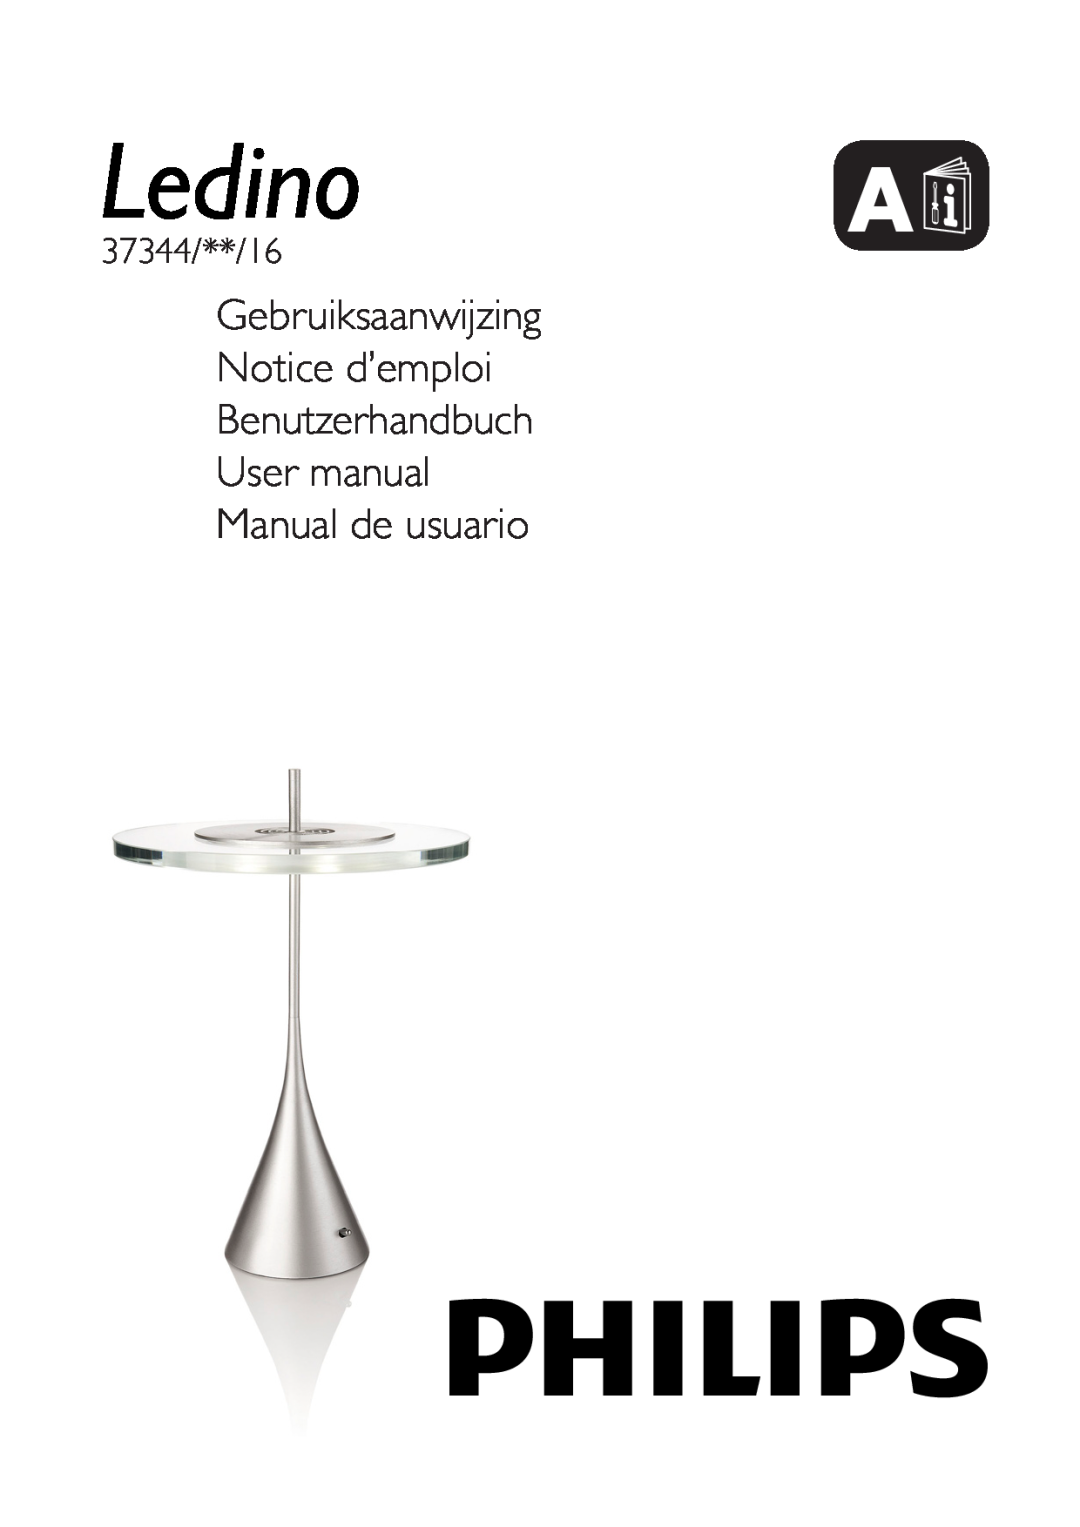 Philips 37344/48/16 user manual Gebruiksaanwijzing Notice d’emploi, Benutzerhandbuch User manual Manual de usuario, Ledino 